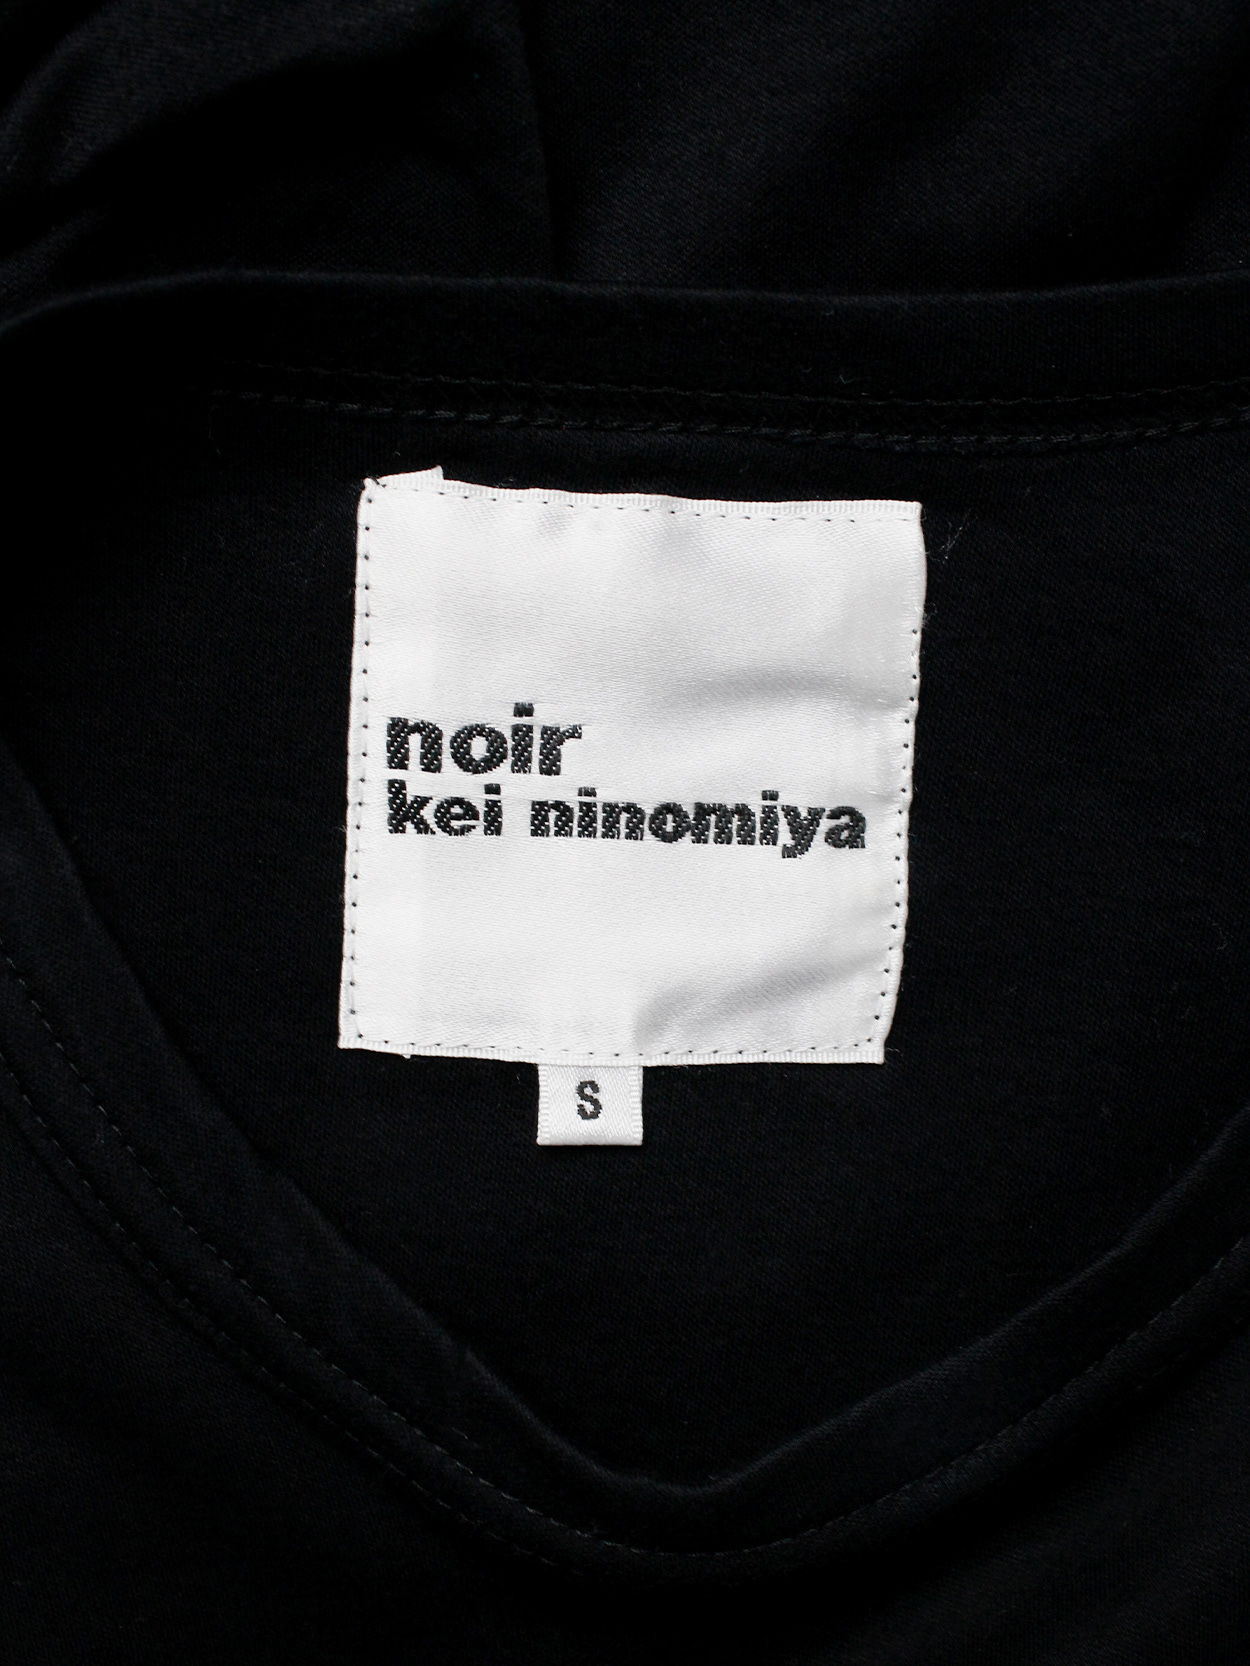 Noir Kei Ninomiya black t-shirt gathered at the waist by rows of pearls ...